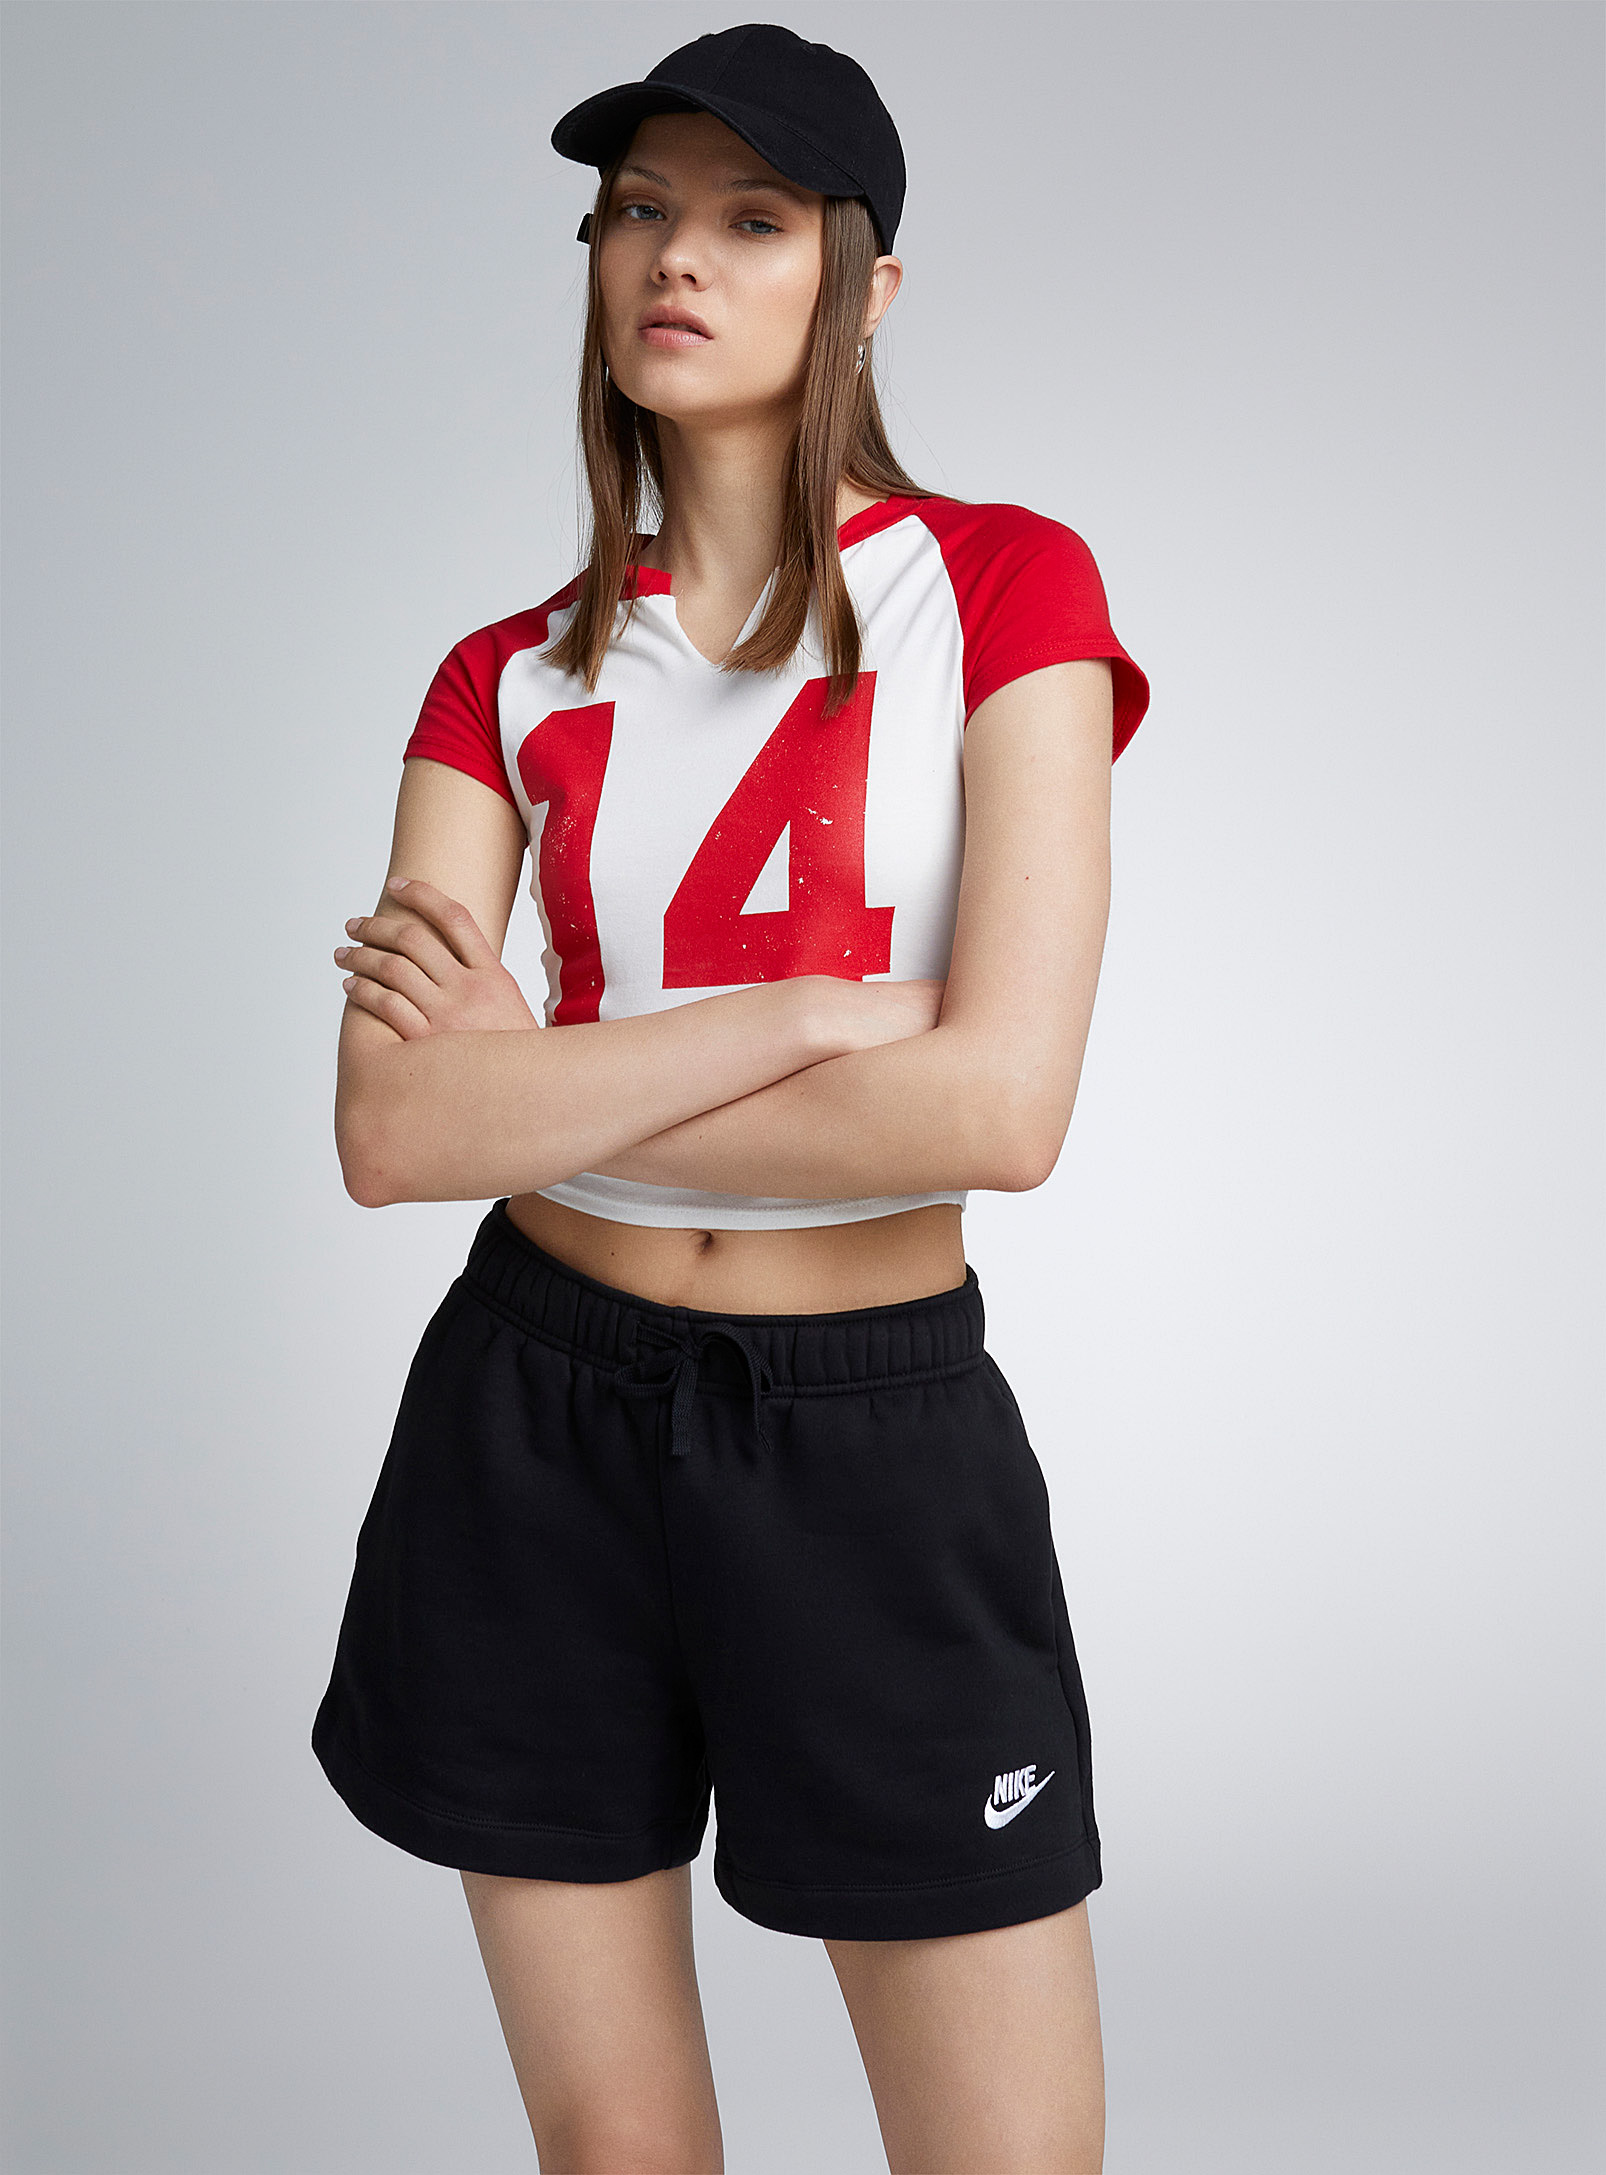 Nike - Women's Logo fleece short